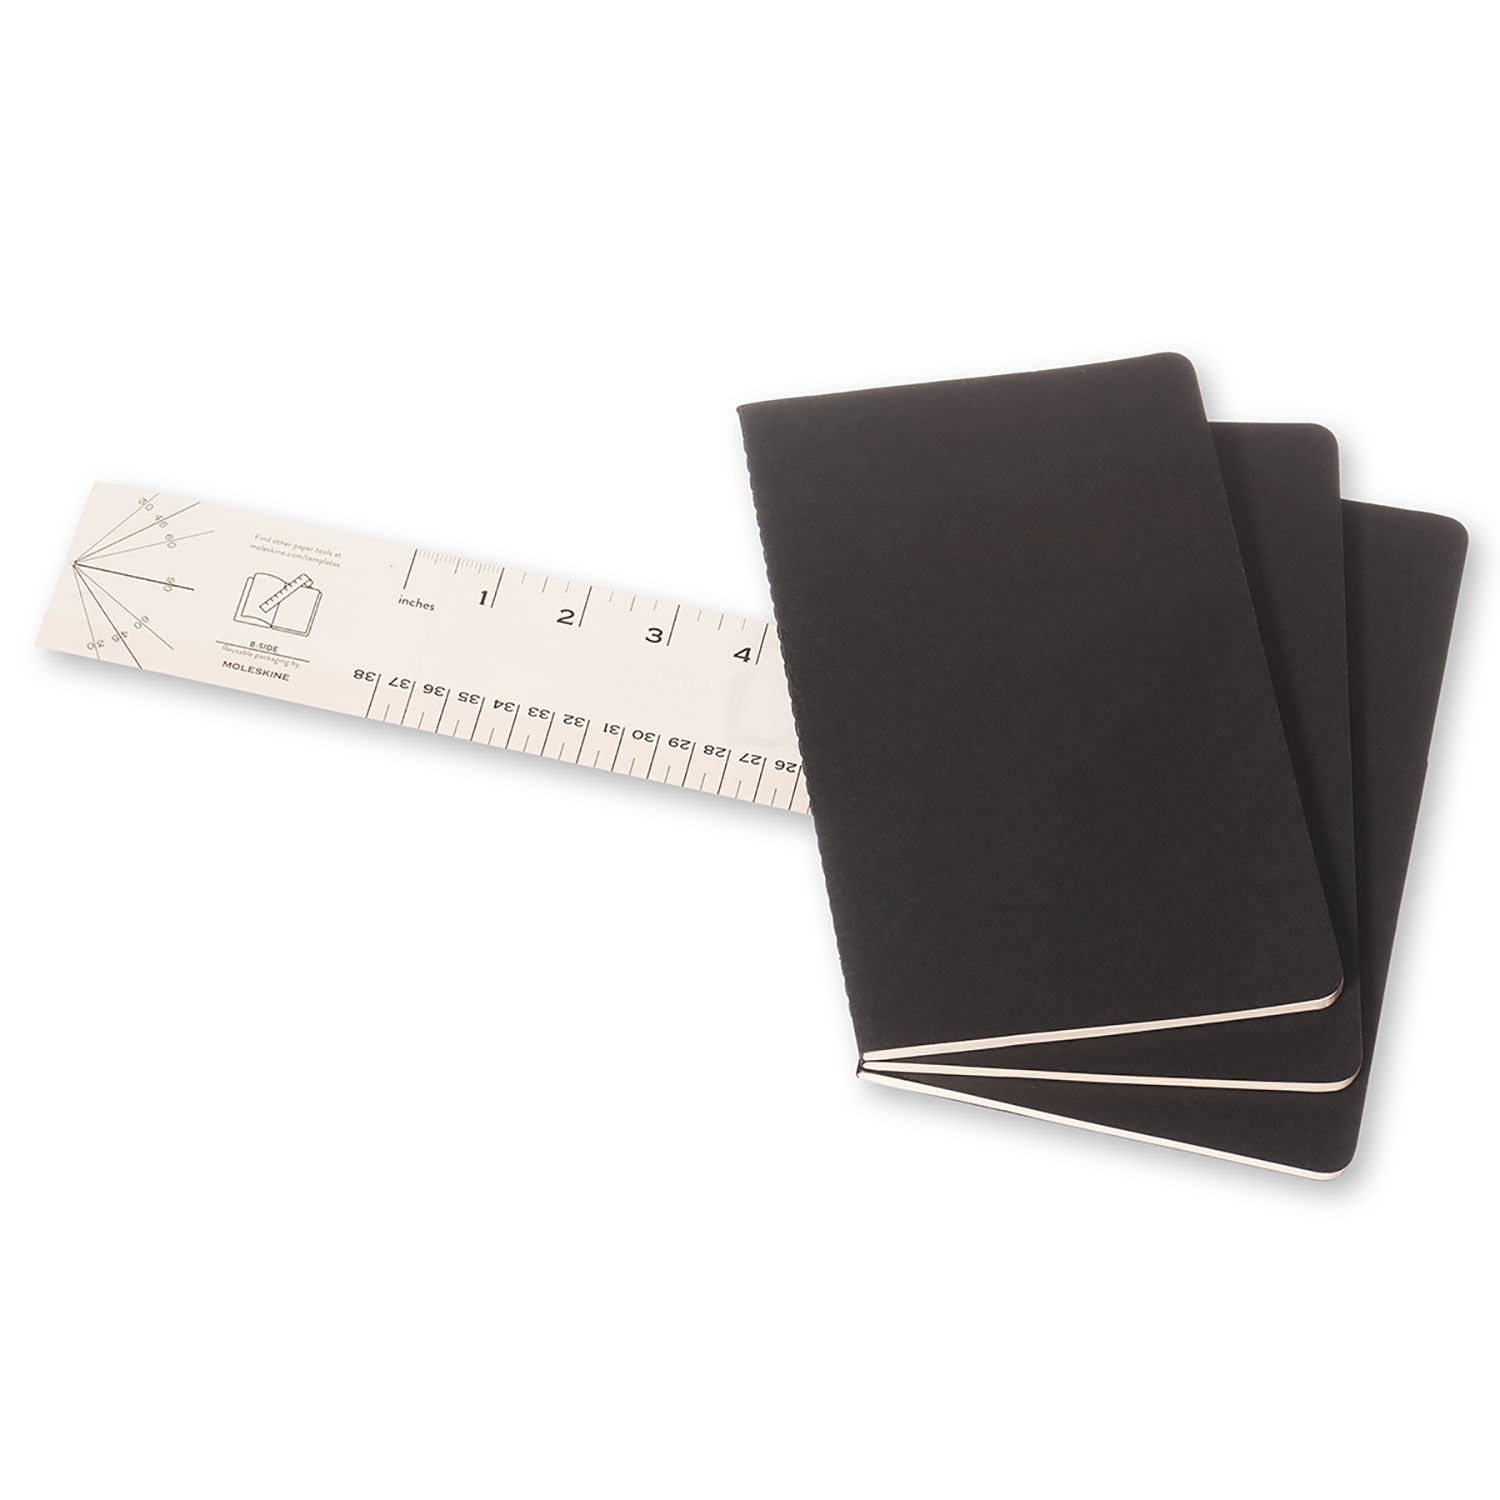 Beige Large Cahier Notebook - Set of 3 Black / Ruled / Large,Black / Plain / Large,Black / Dotted / Large,Black / Squared / Large,Brisk Blue / Ruled / Large,Brisk Blue / Plain / Large,Brisk Blue / Dotted / Large,Brisk Blue / Squared / Large Moleskine